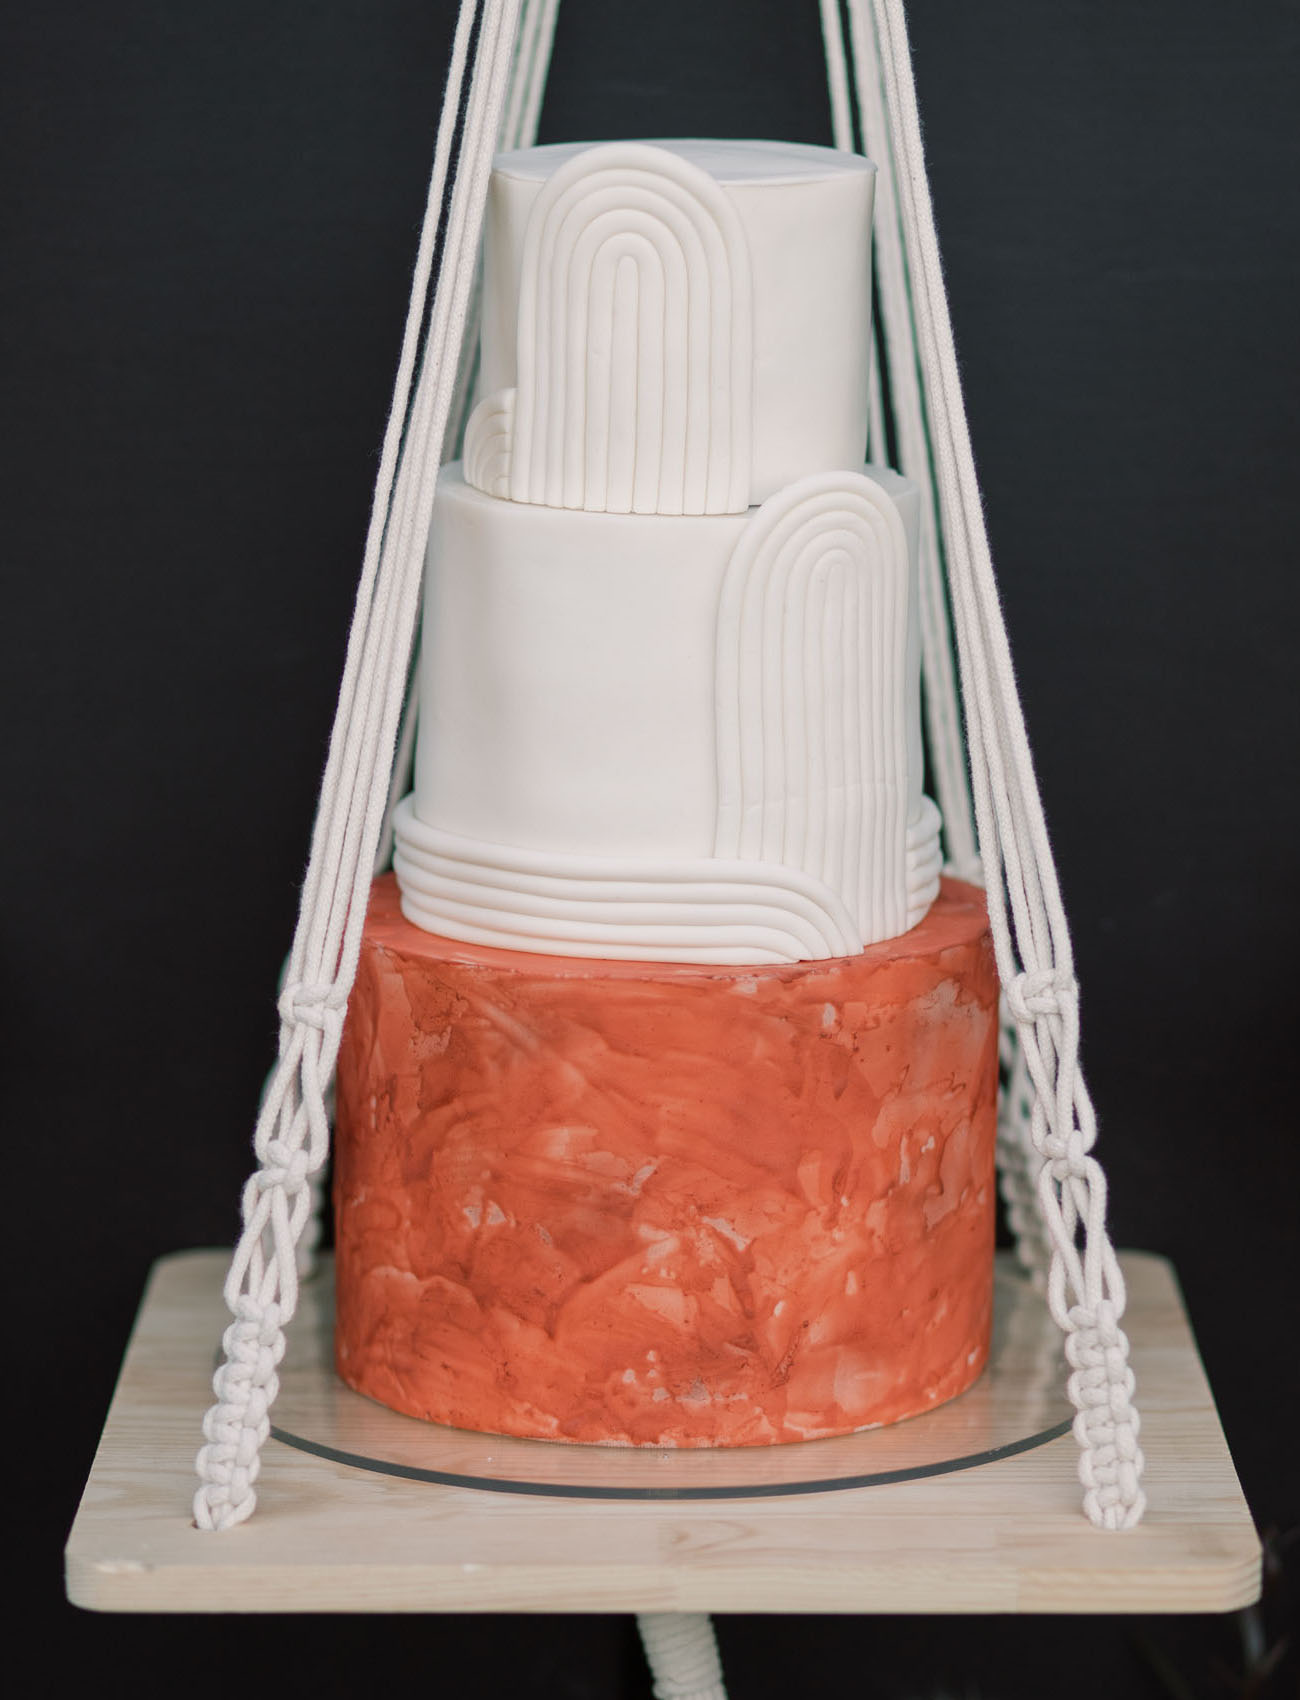 Modern wedding cake on a macrame hanger